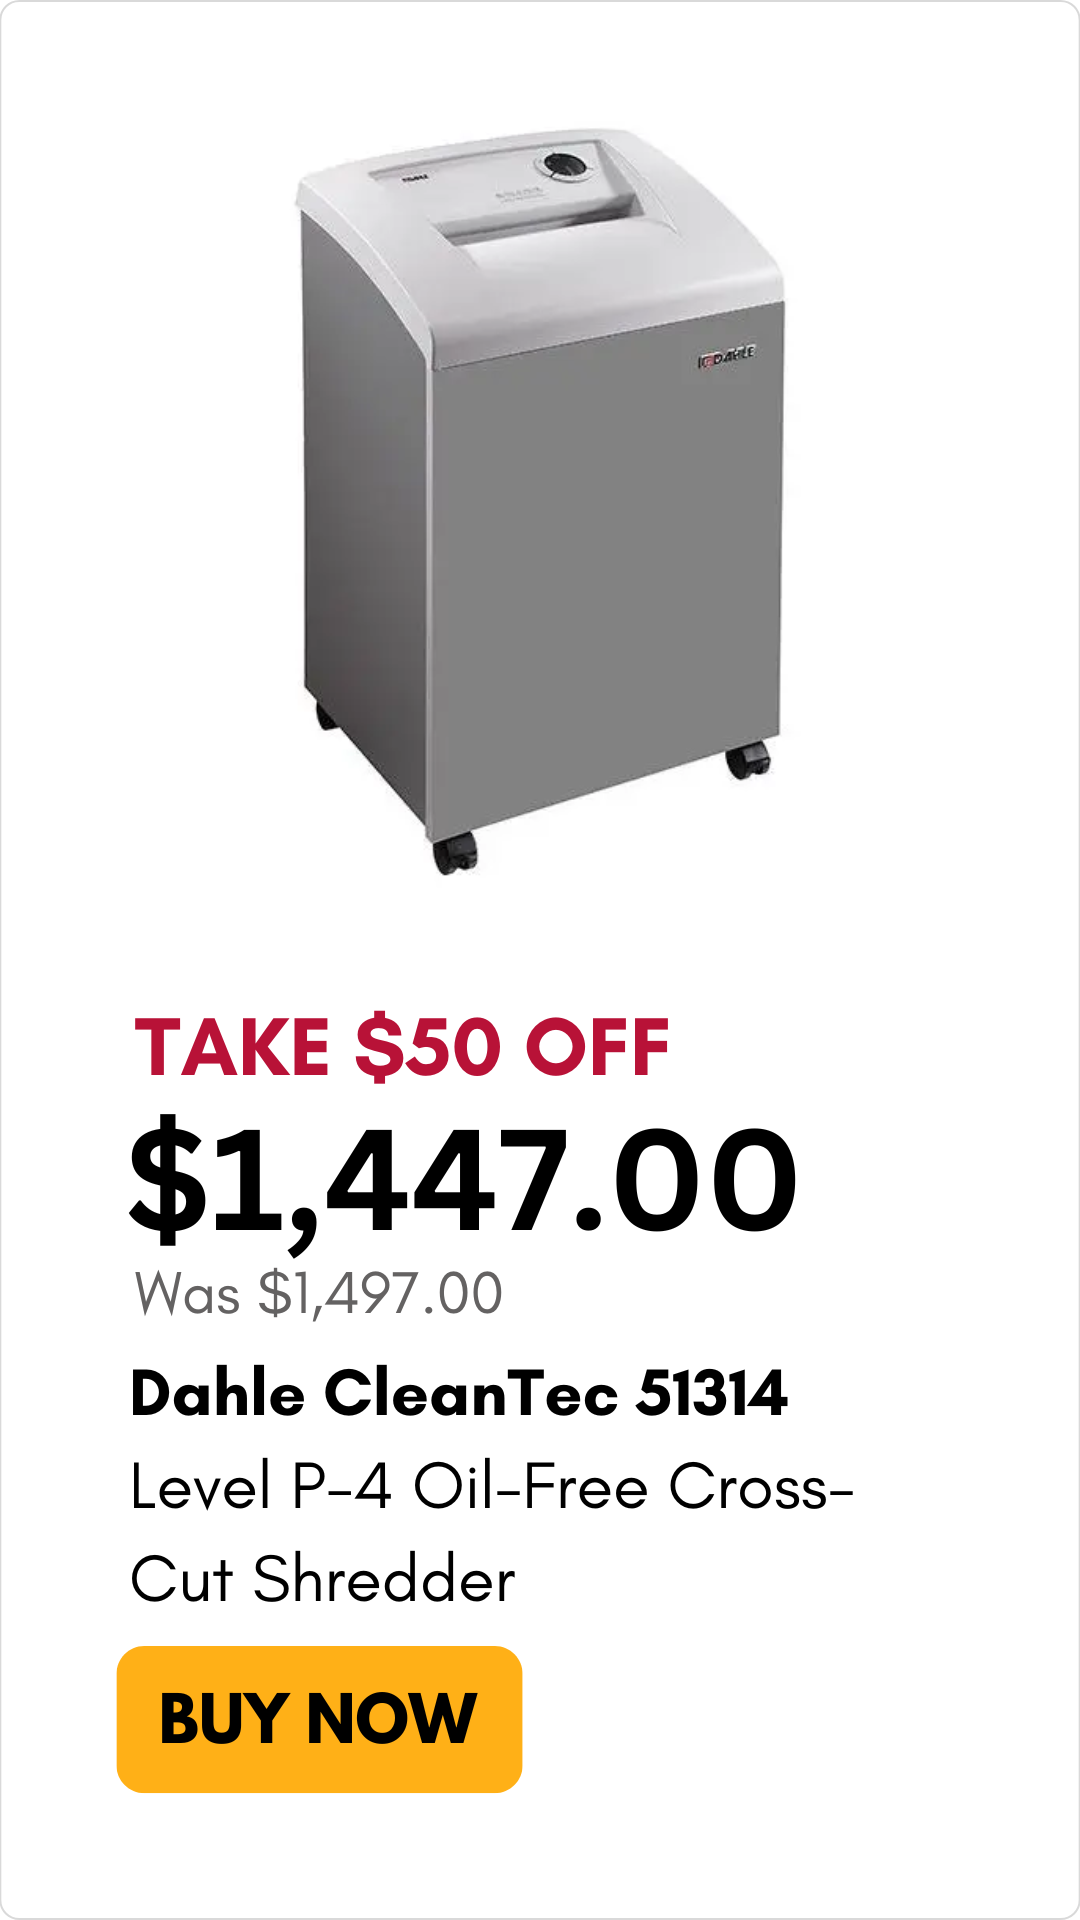 Dahle CleanTec 51314 Level P-4 Oil-Free Cross-Cut Shredder on sale for $50 off on MyBinding.com